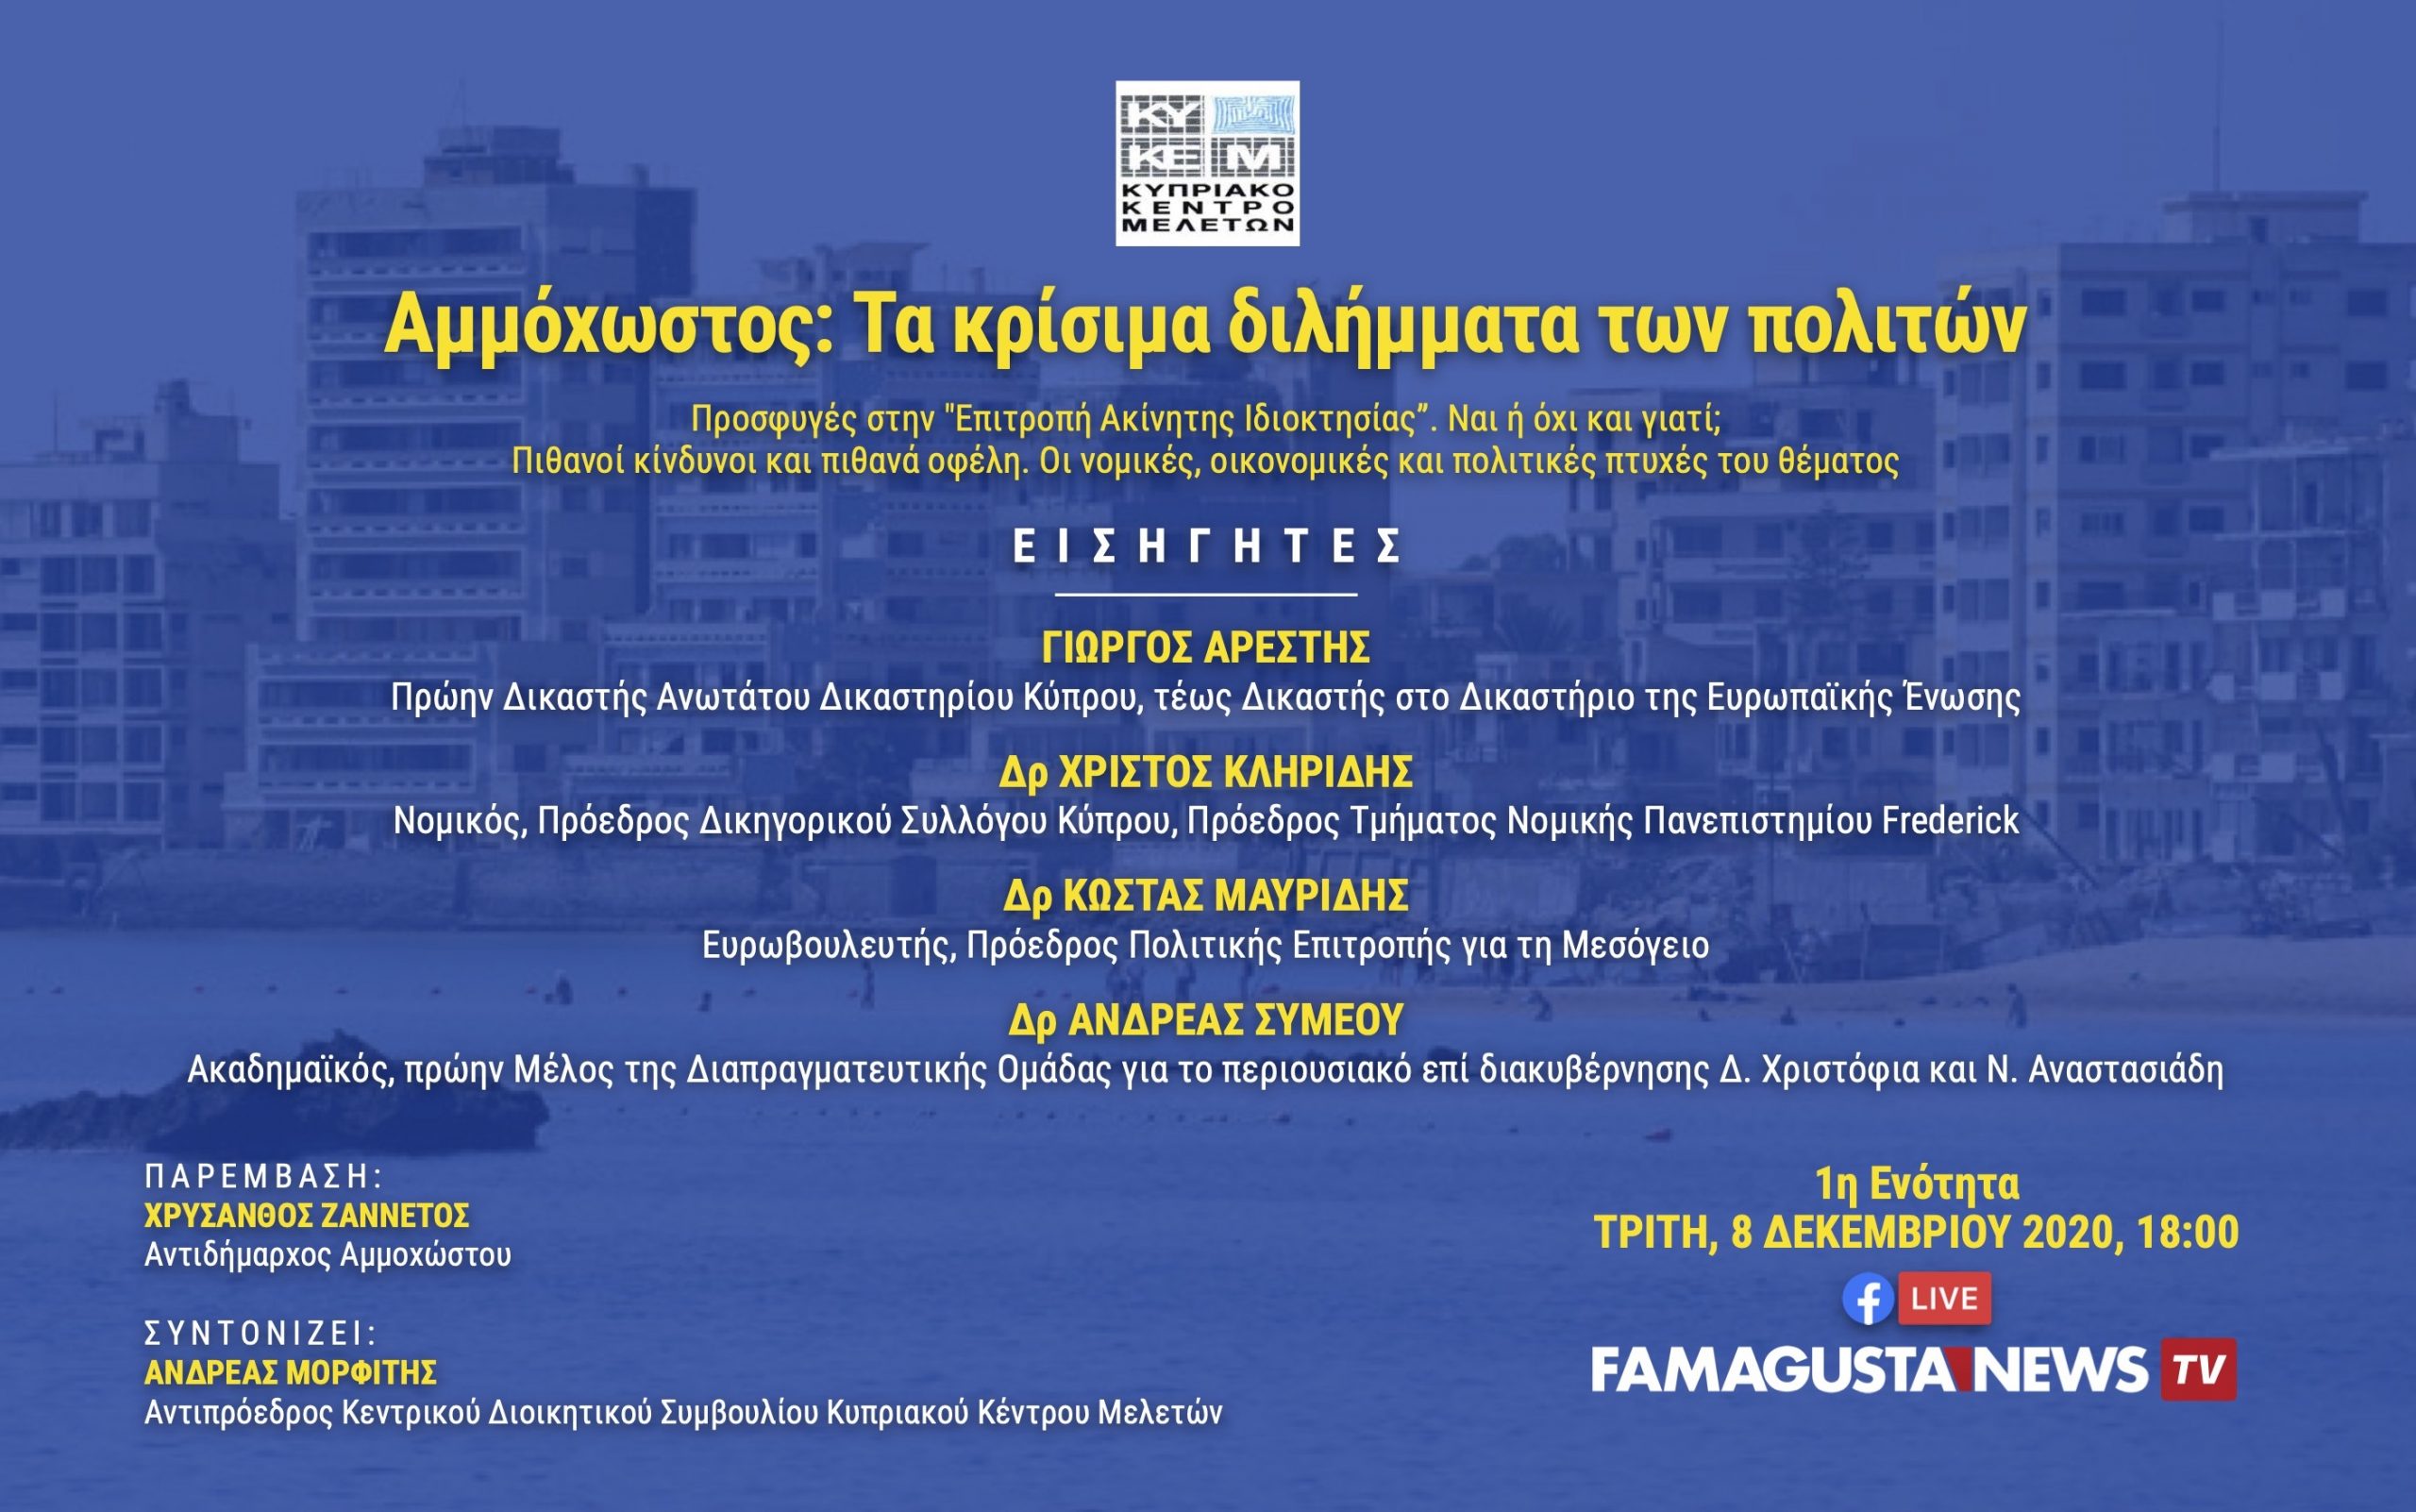 KYKEM ENOTHTA 1 scaled FamagustaNews TV, KYKEM, LIVE STREAMING, on line event, Occupied Famagusta